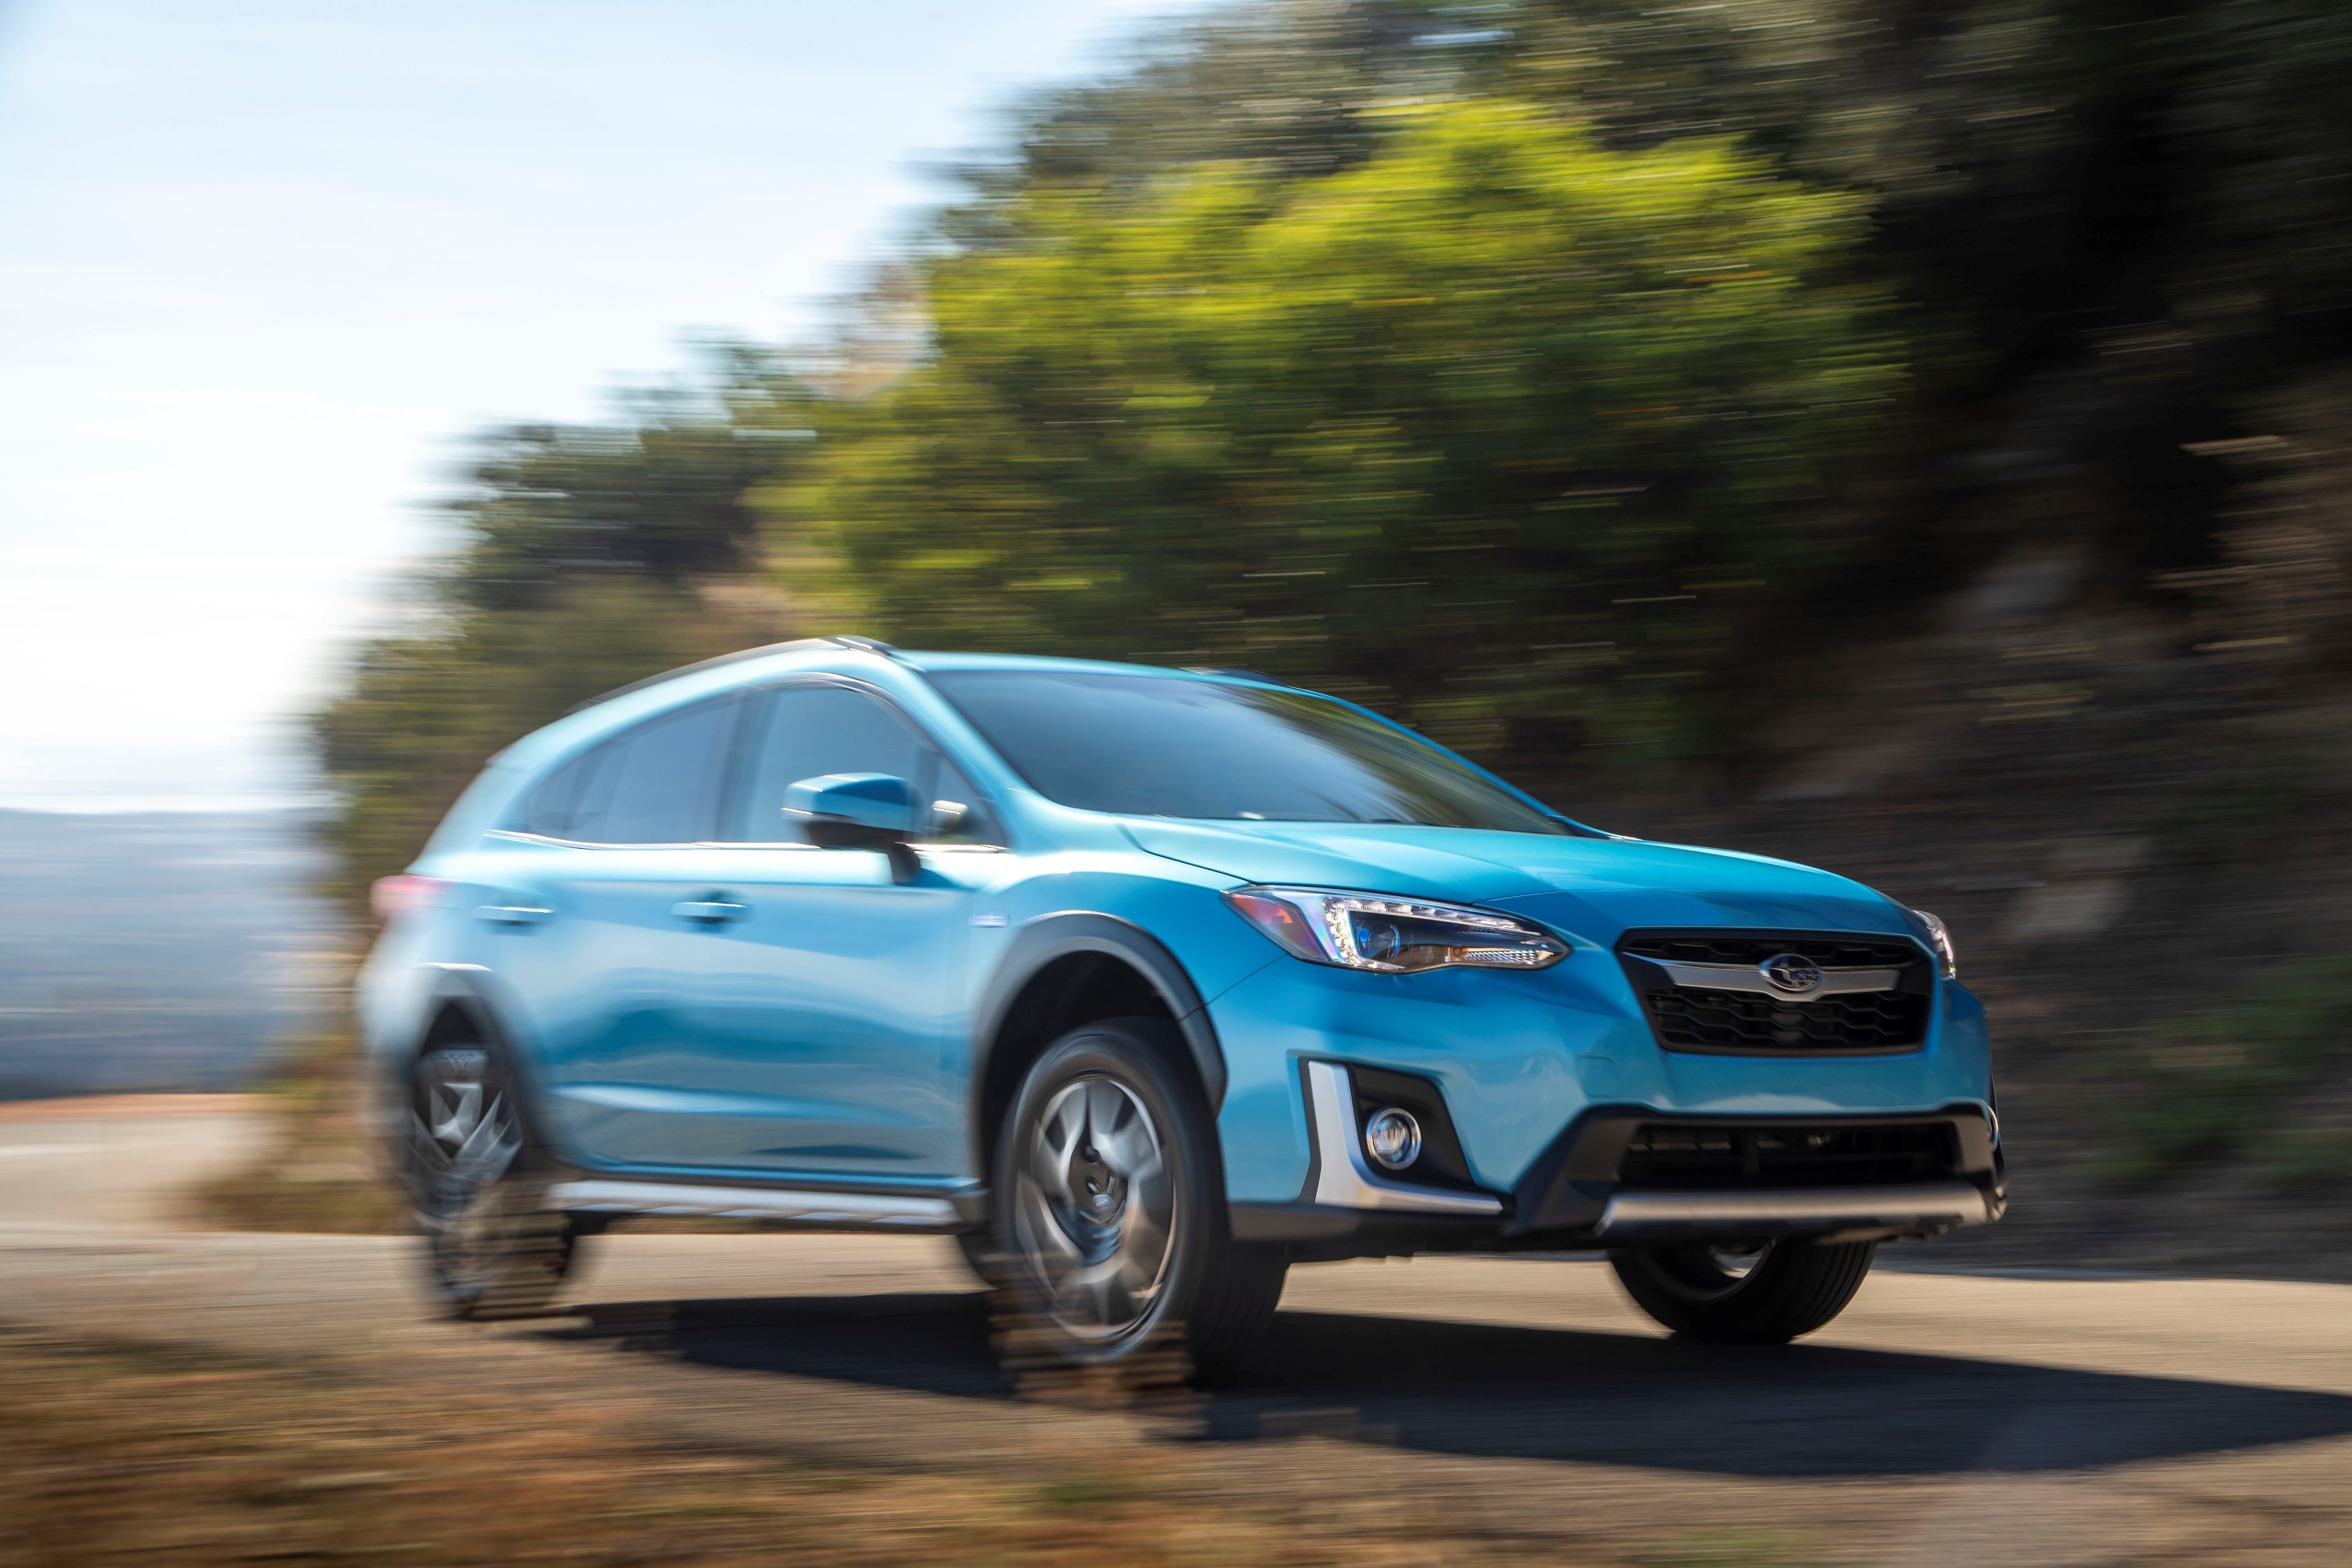 2019 Subaru Crosstrek Hybrid Can Travel 17 Miles In EV Mode autoevolution